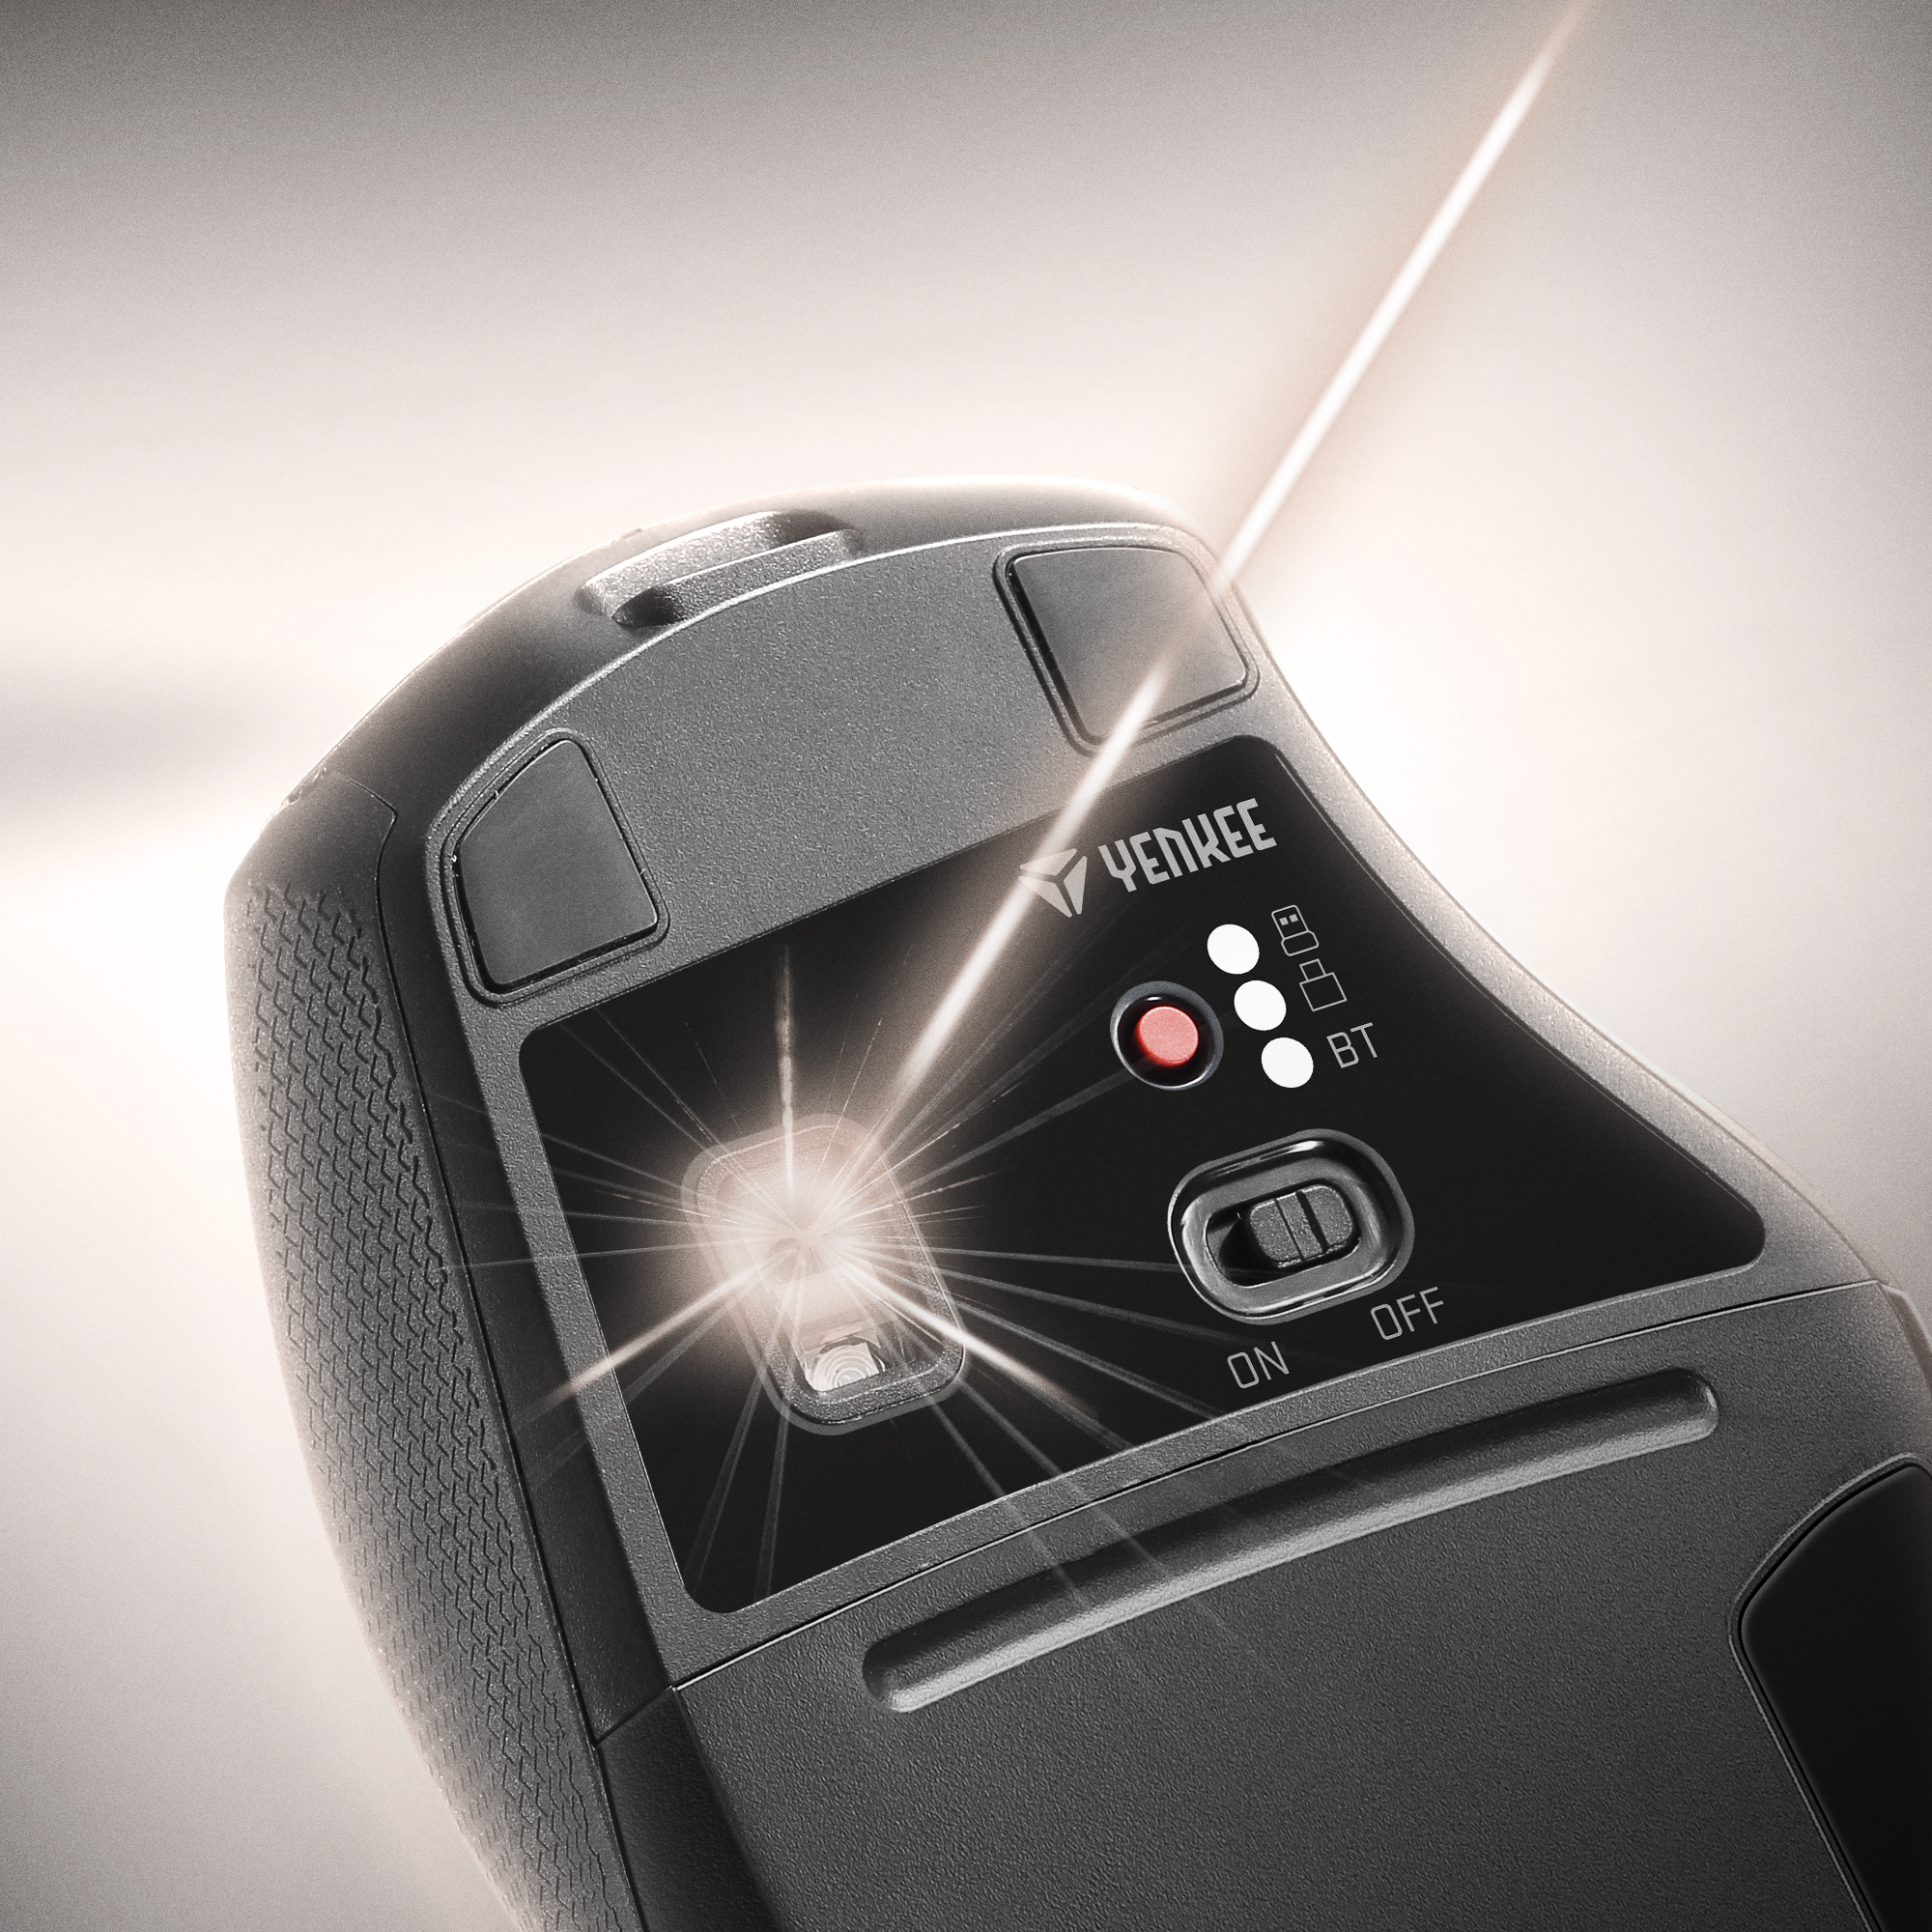 Sensitive Pixart PAW3212 sensor for high accuracy and fast response